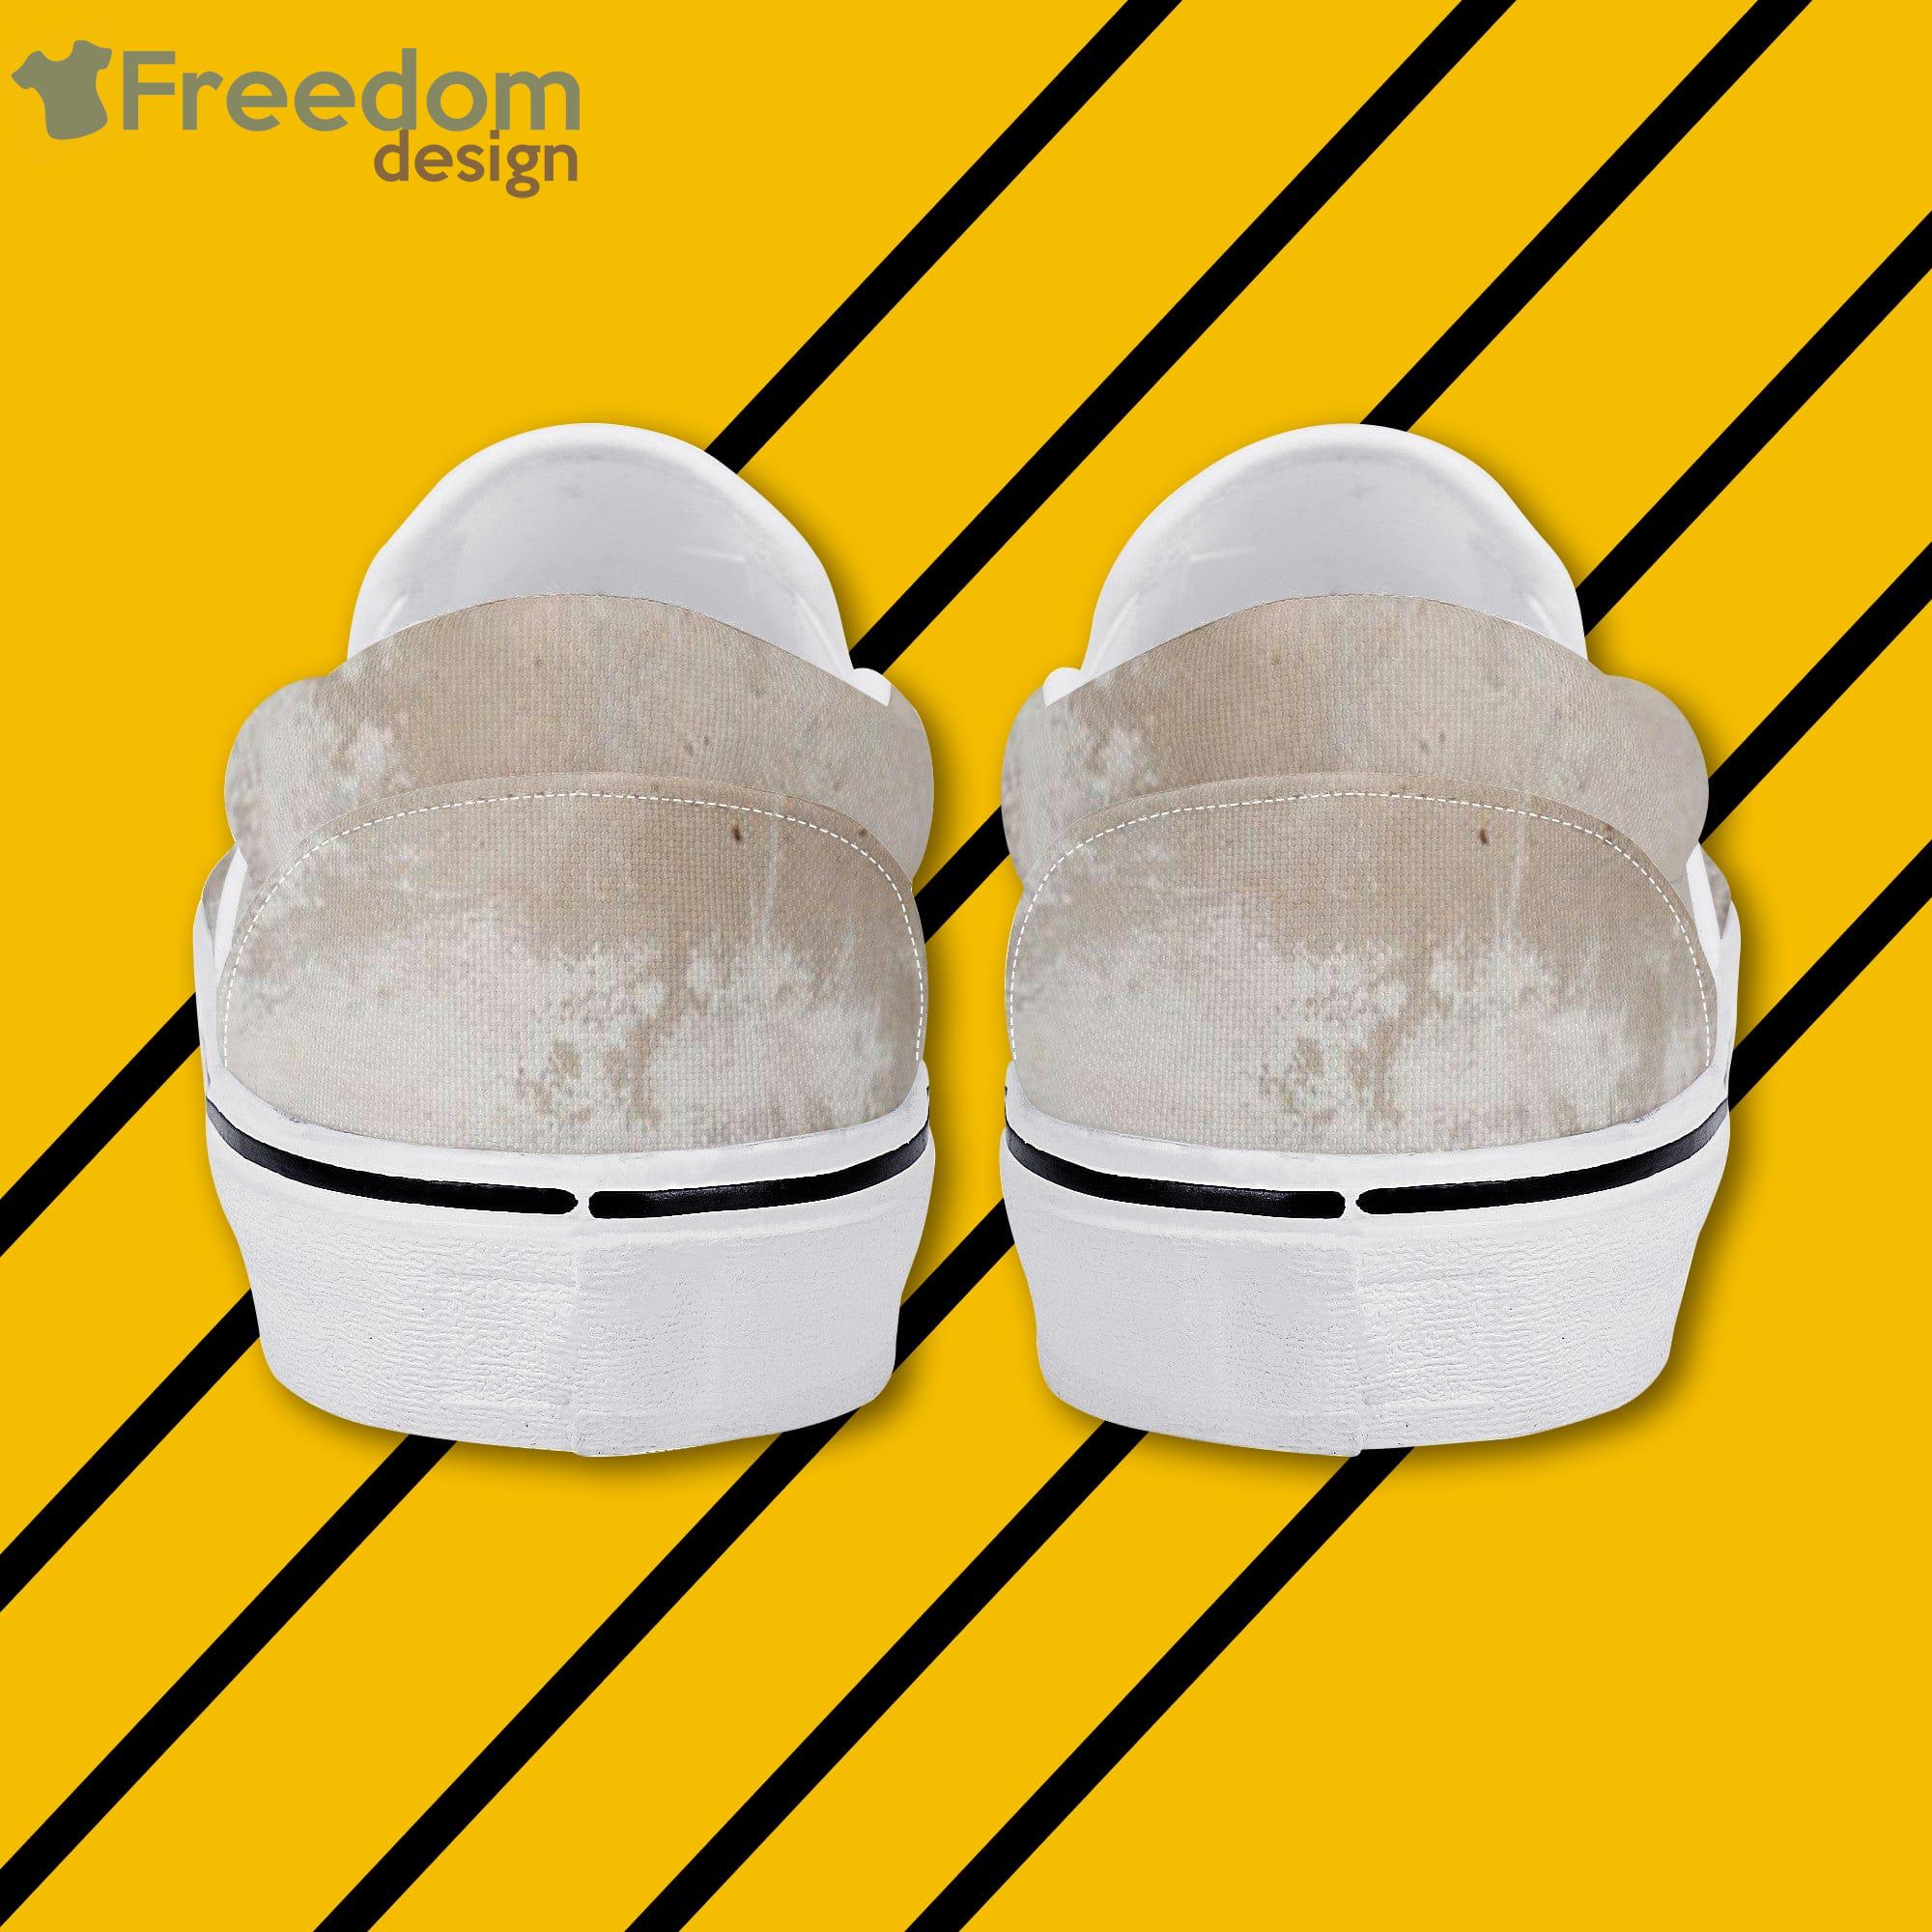 Juice Wrld & XXX Black All Over Print Slip On Shoes - Freedomdesign